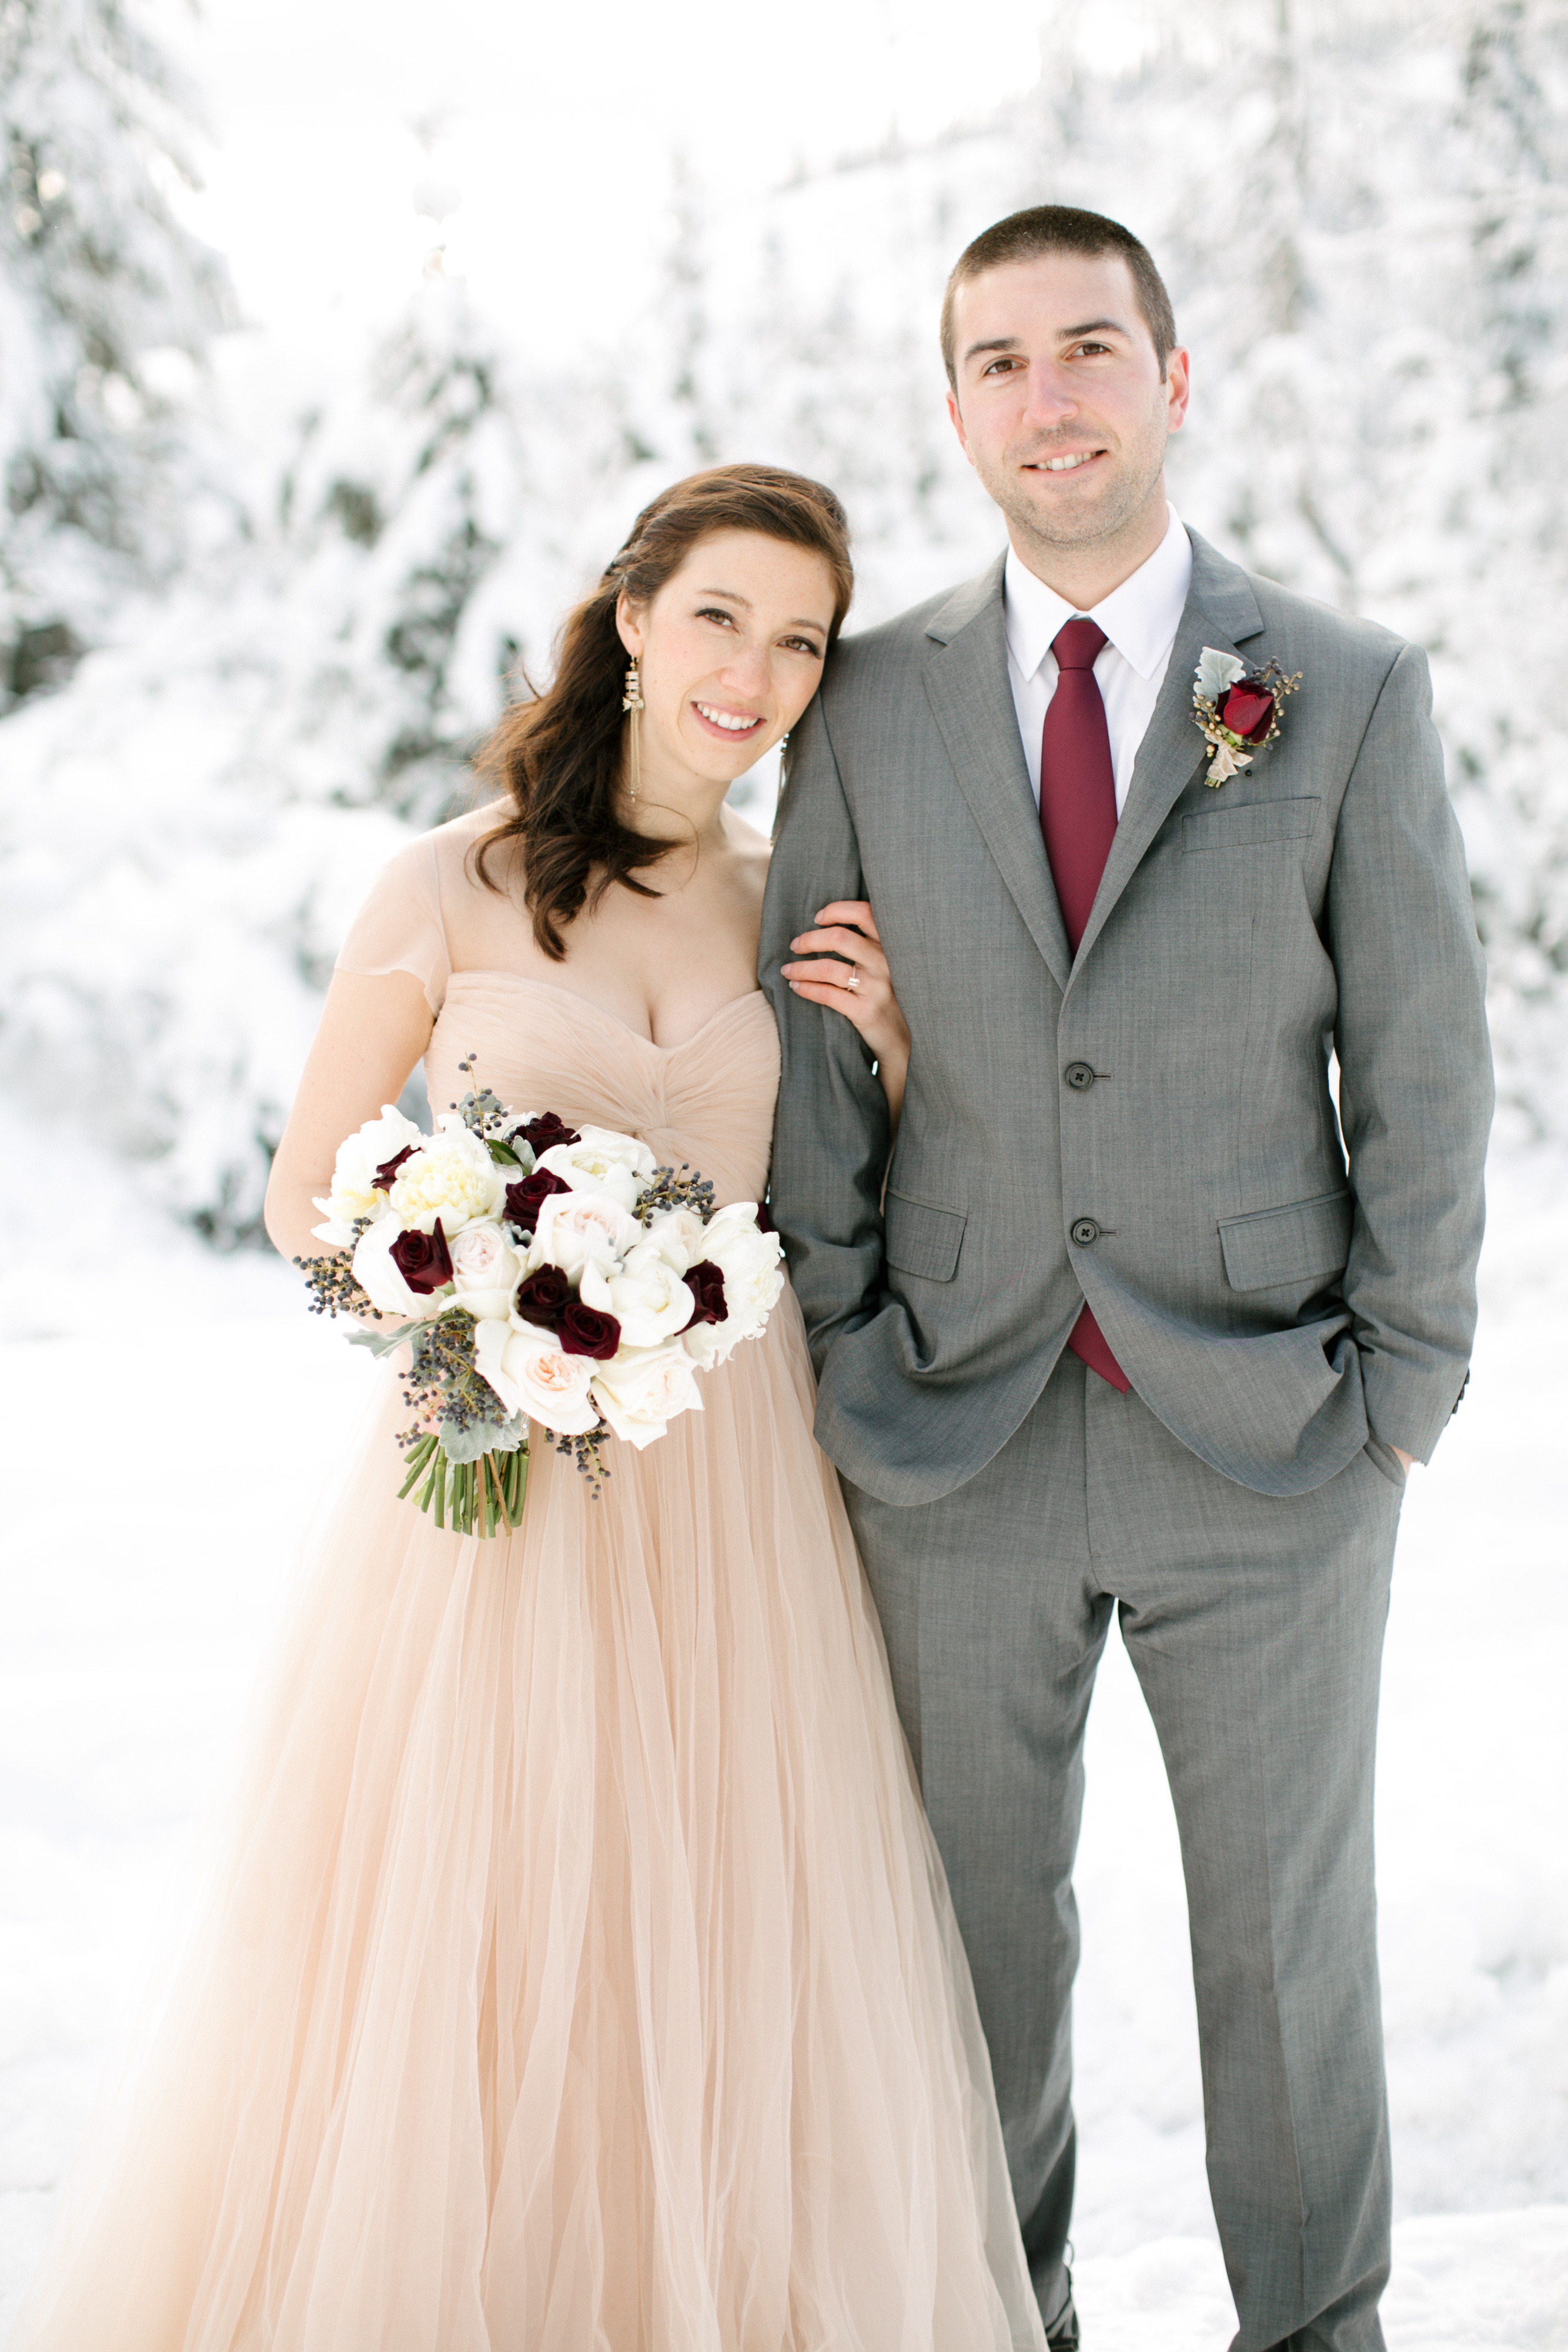 Romantic Winter Wedding Inspiration | Winter wedding inspiration ...